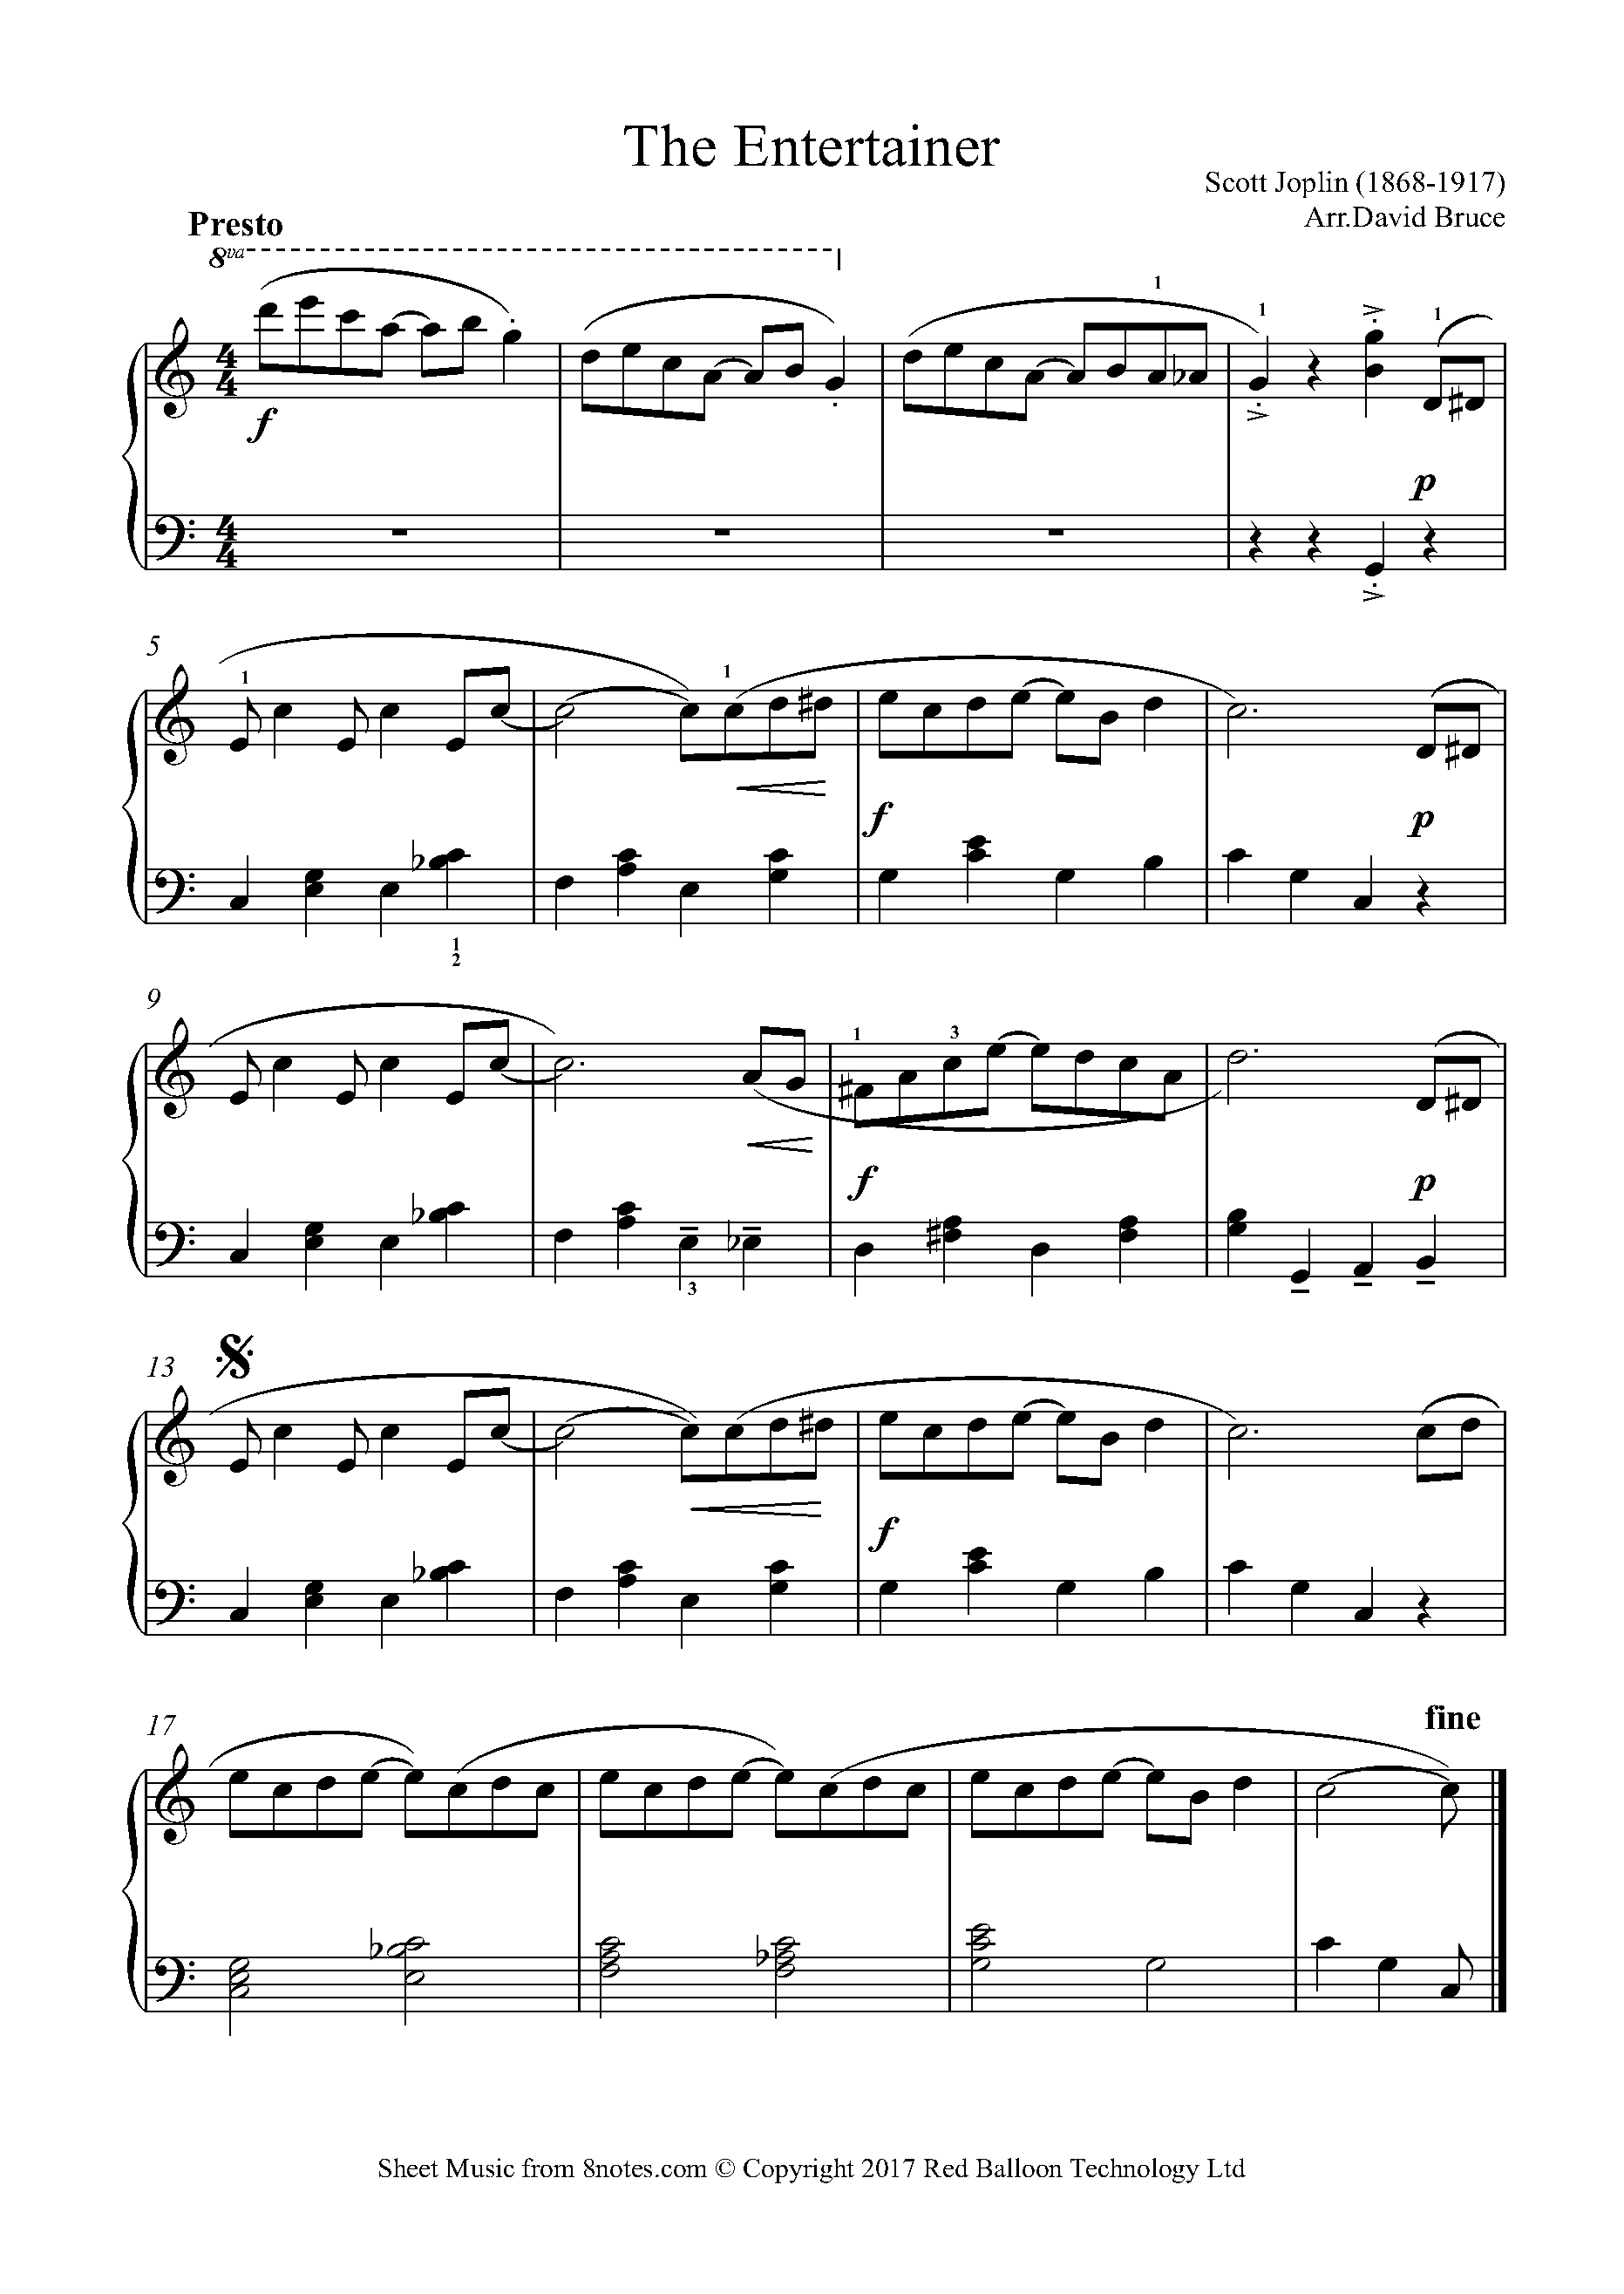 Albany Detener constante Scott Joplin - The Entertainer Sheet music for Piano - 8notes.com